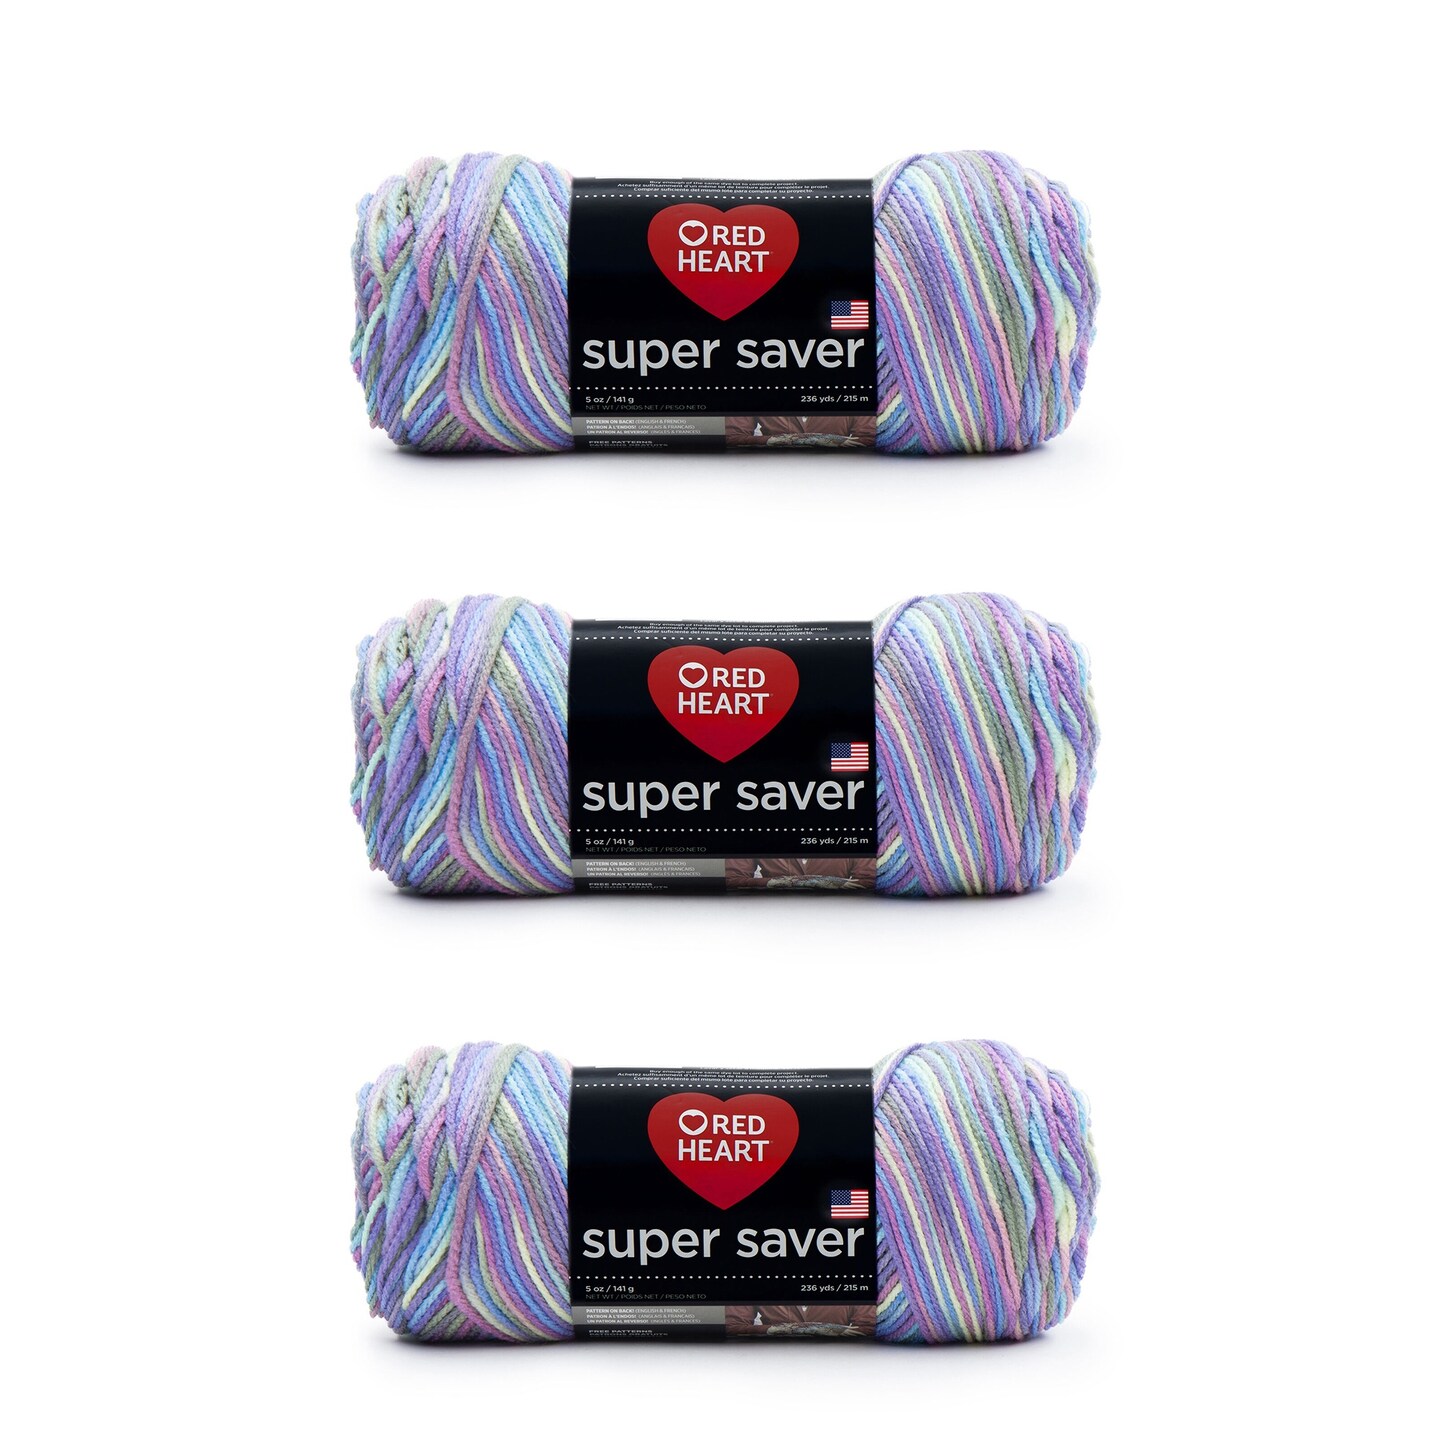 Red Heart Super Saver Monet Yarn - 3 Pack of 141g/5oz - Acrylic - 4 Medium (Worsted) - 364 Yards - Knitting/Crochet